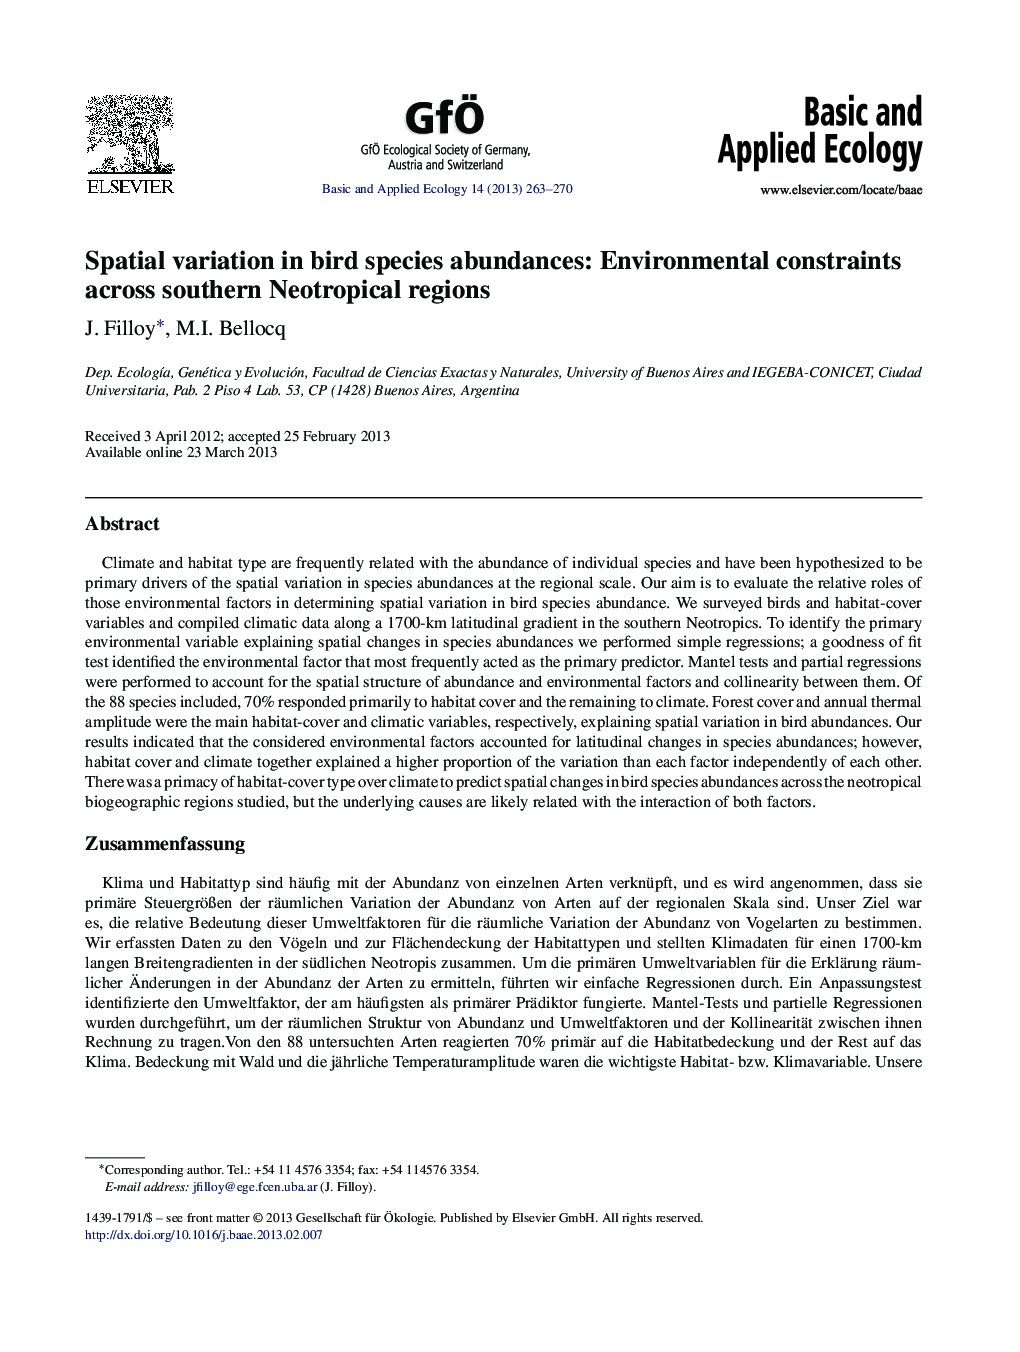 Spatial variation in bird species abundances: Environmental constraints across southern Neotropical regions